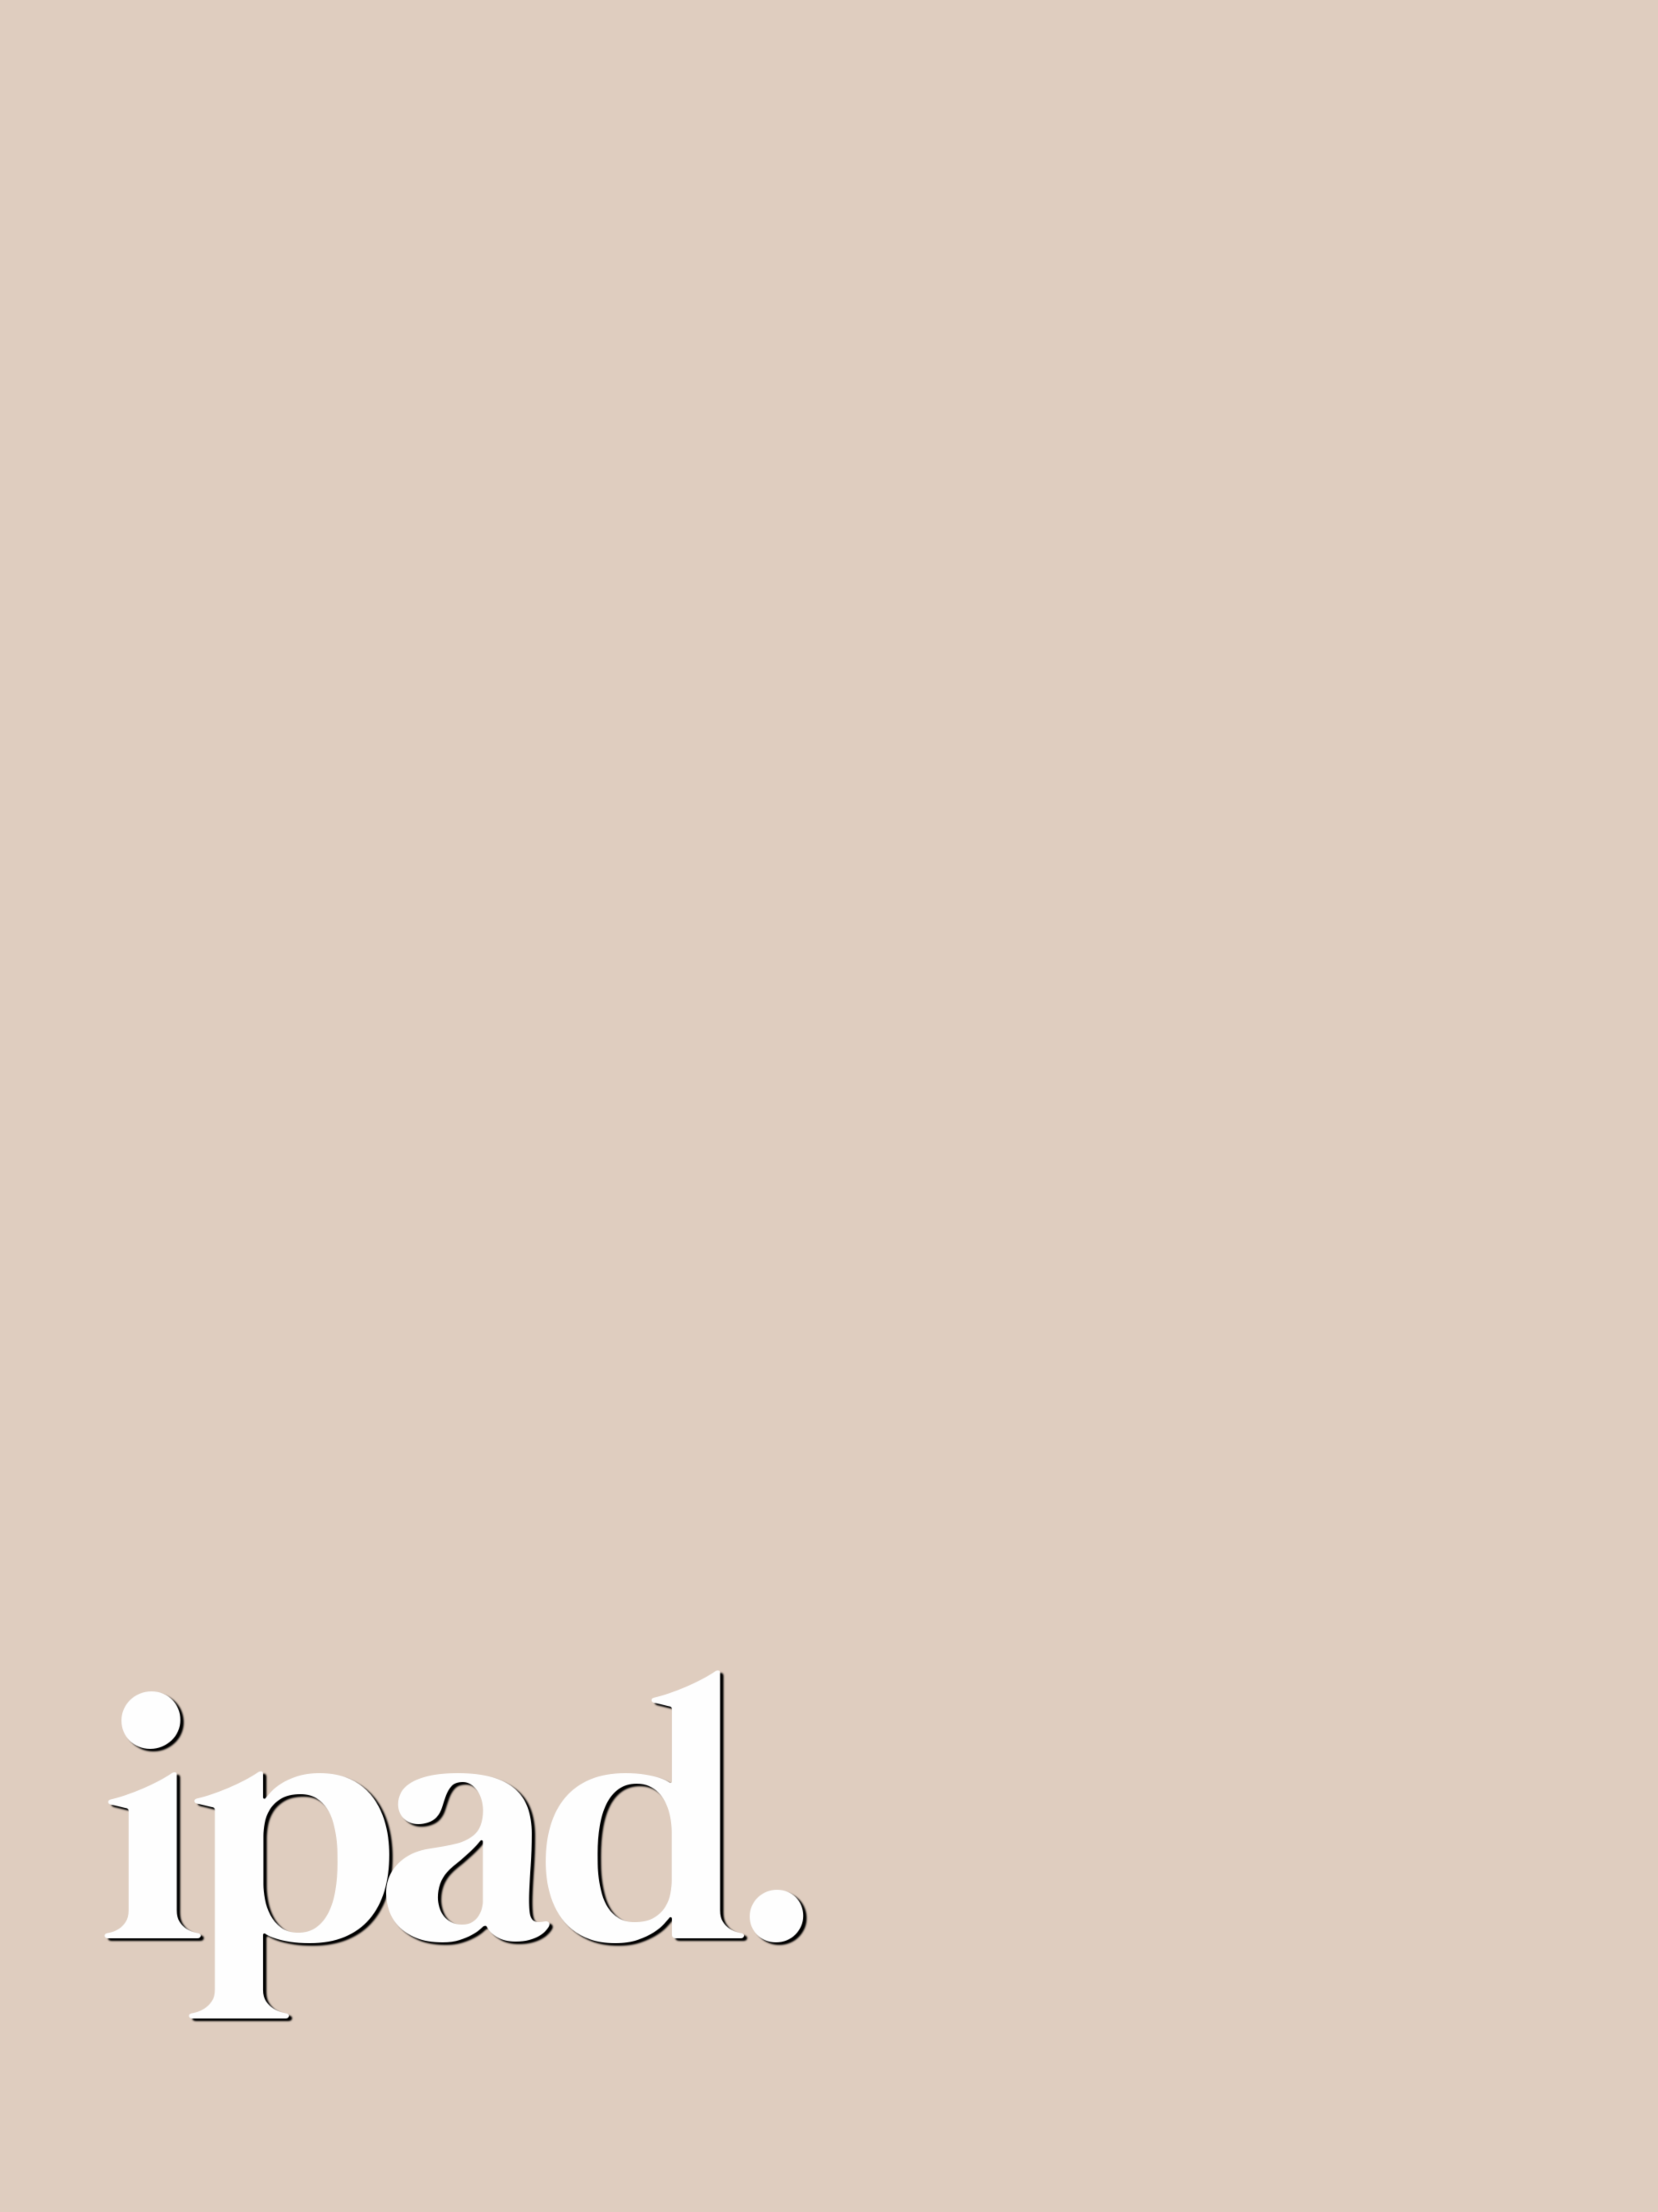 IPad Pro Hintergrundbild 2048x2732. Free aesthetic iPad pro 2020 background, wallpaper & screensavers